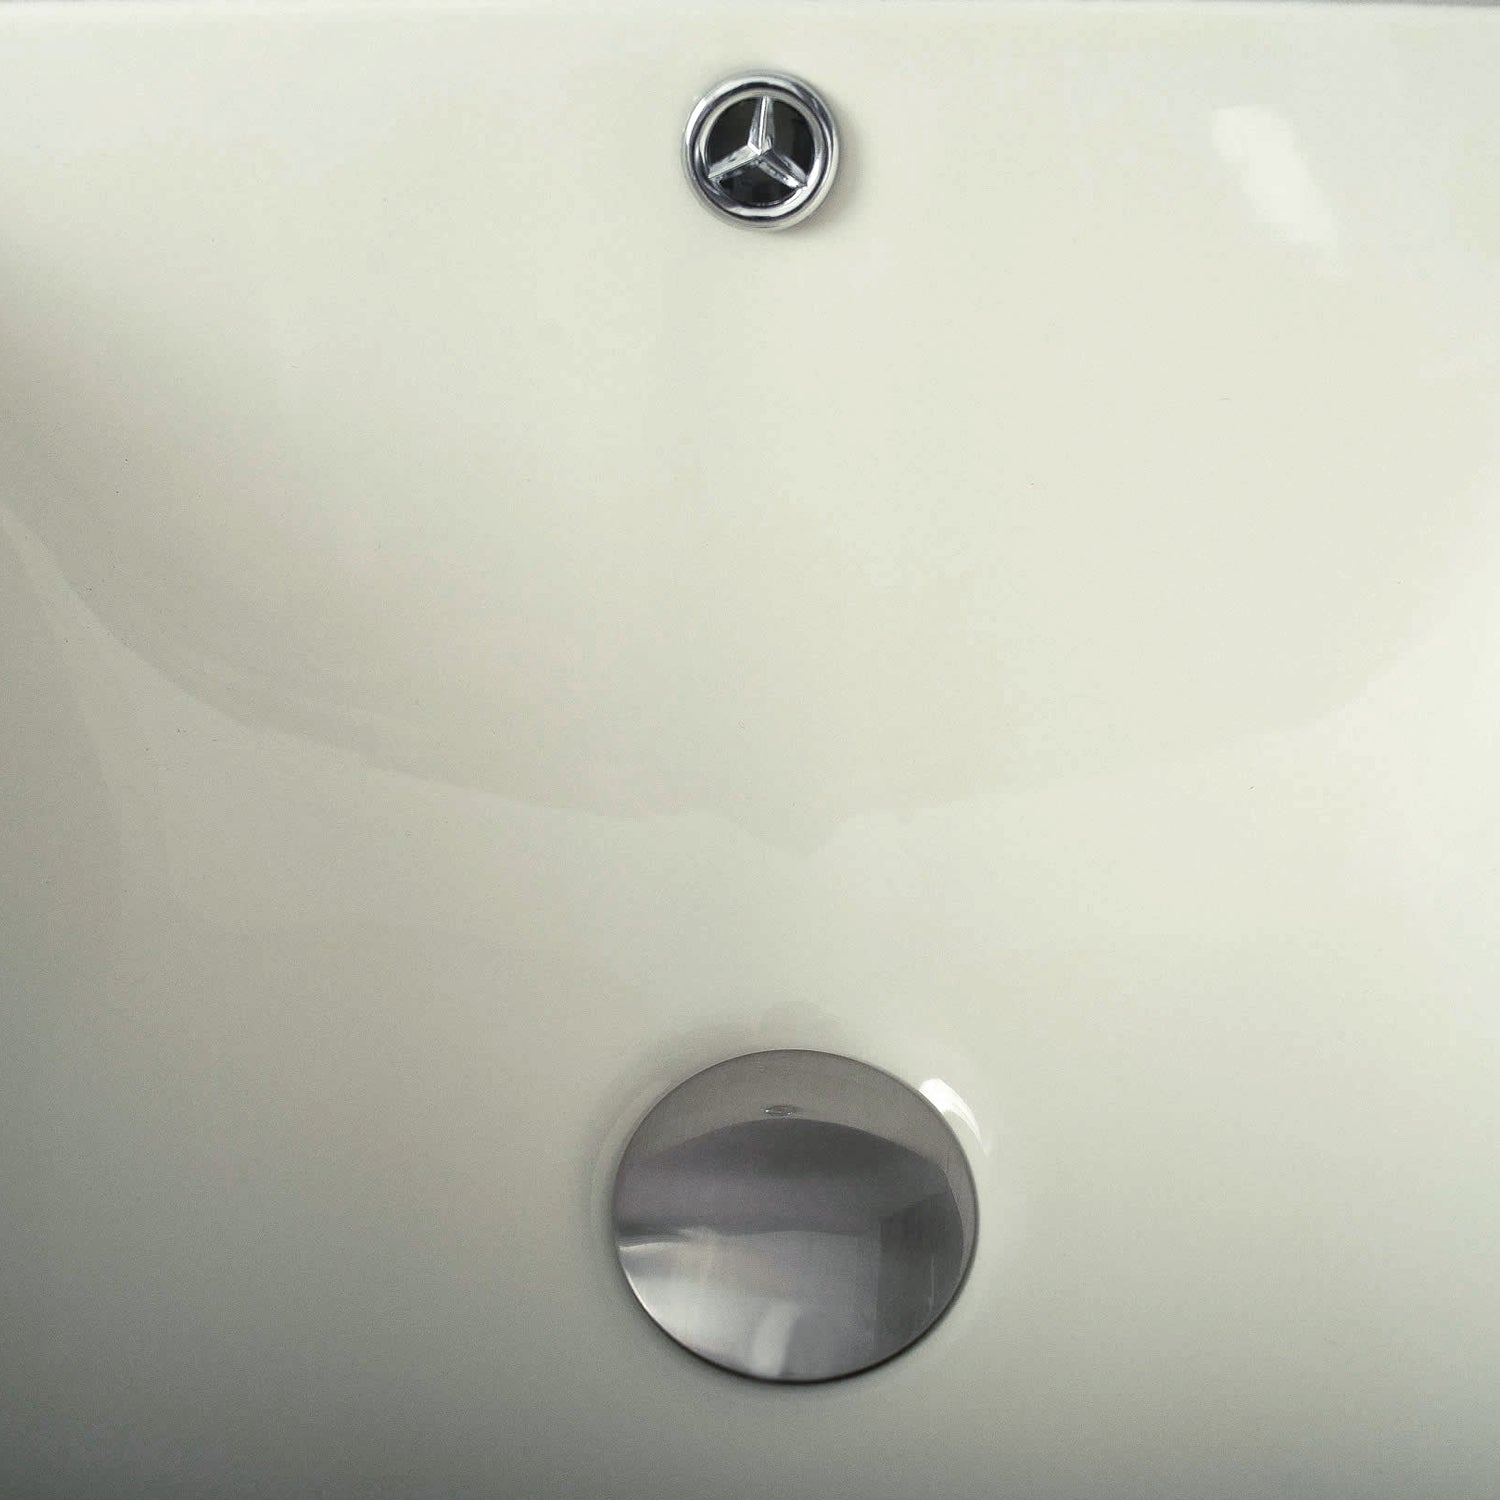 DAX Ceramic Square Single Bowl Undermount Bathroom Sink, Ivory Finish, 18-1/2 x 13-1/2 x 8-1/16 Inches (BSN-202C-I)